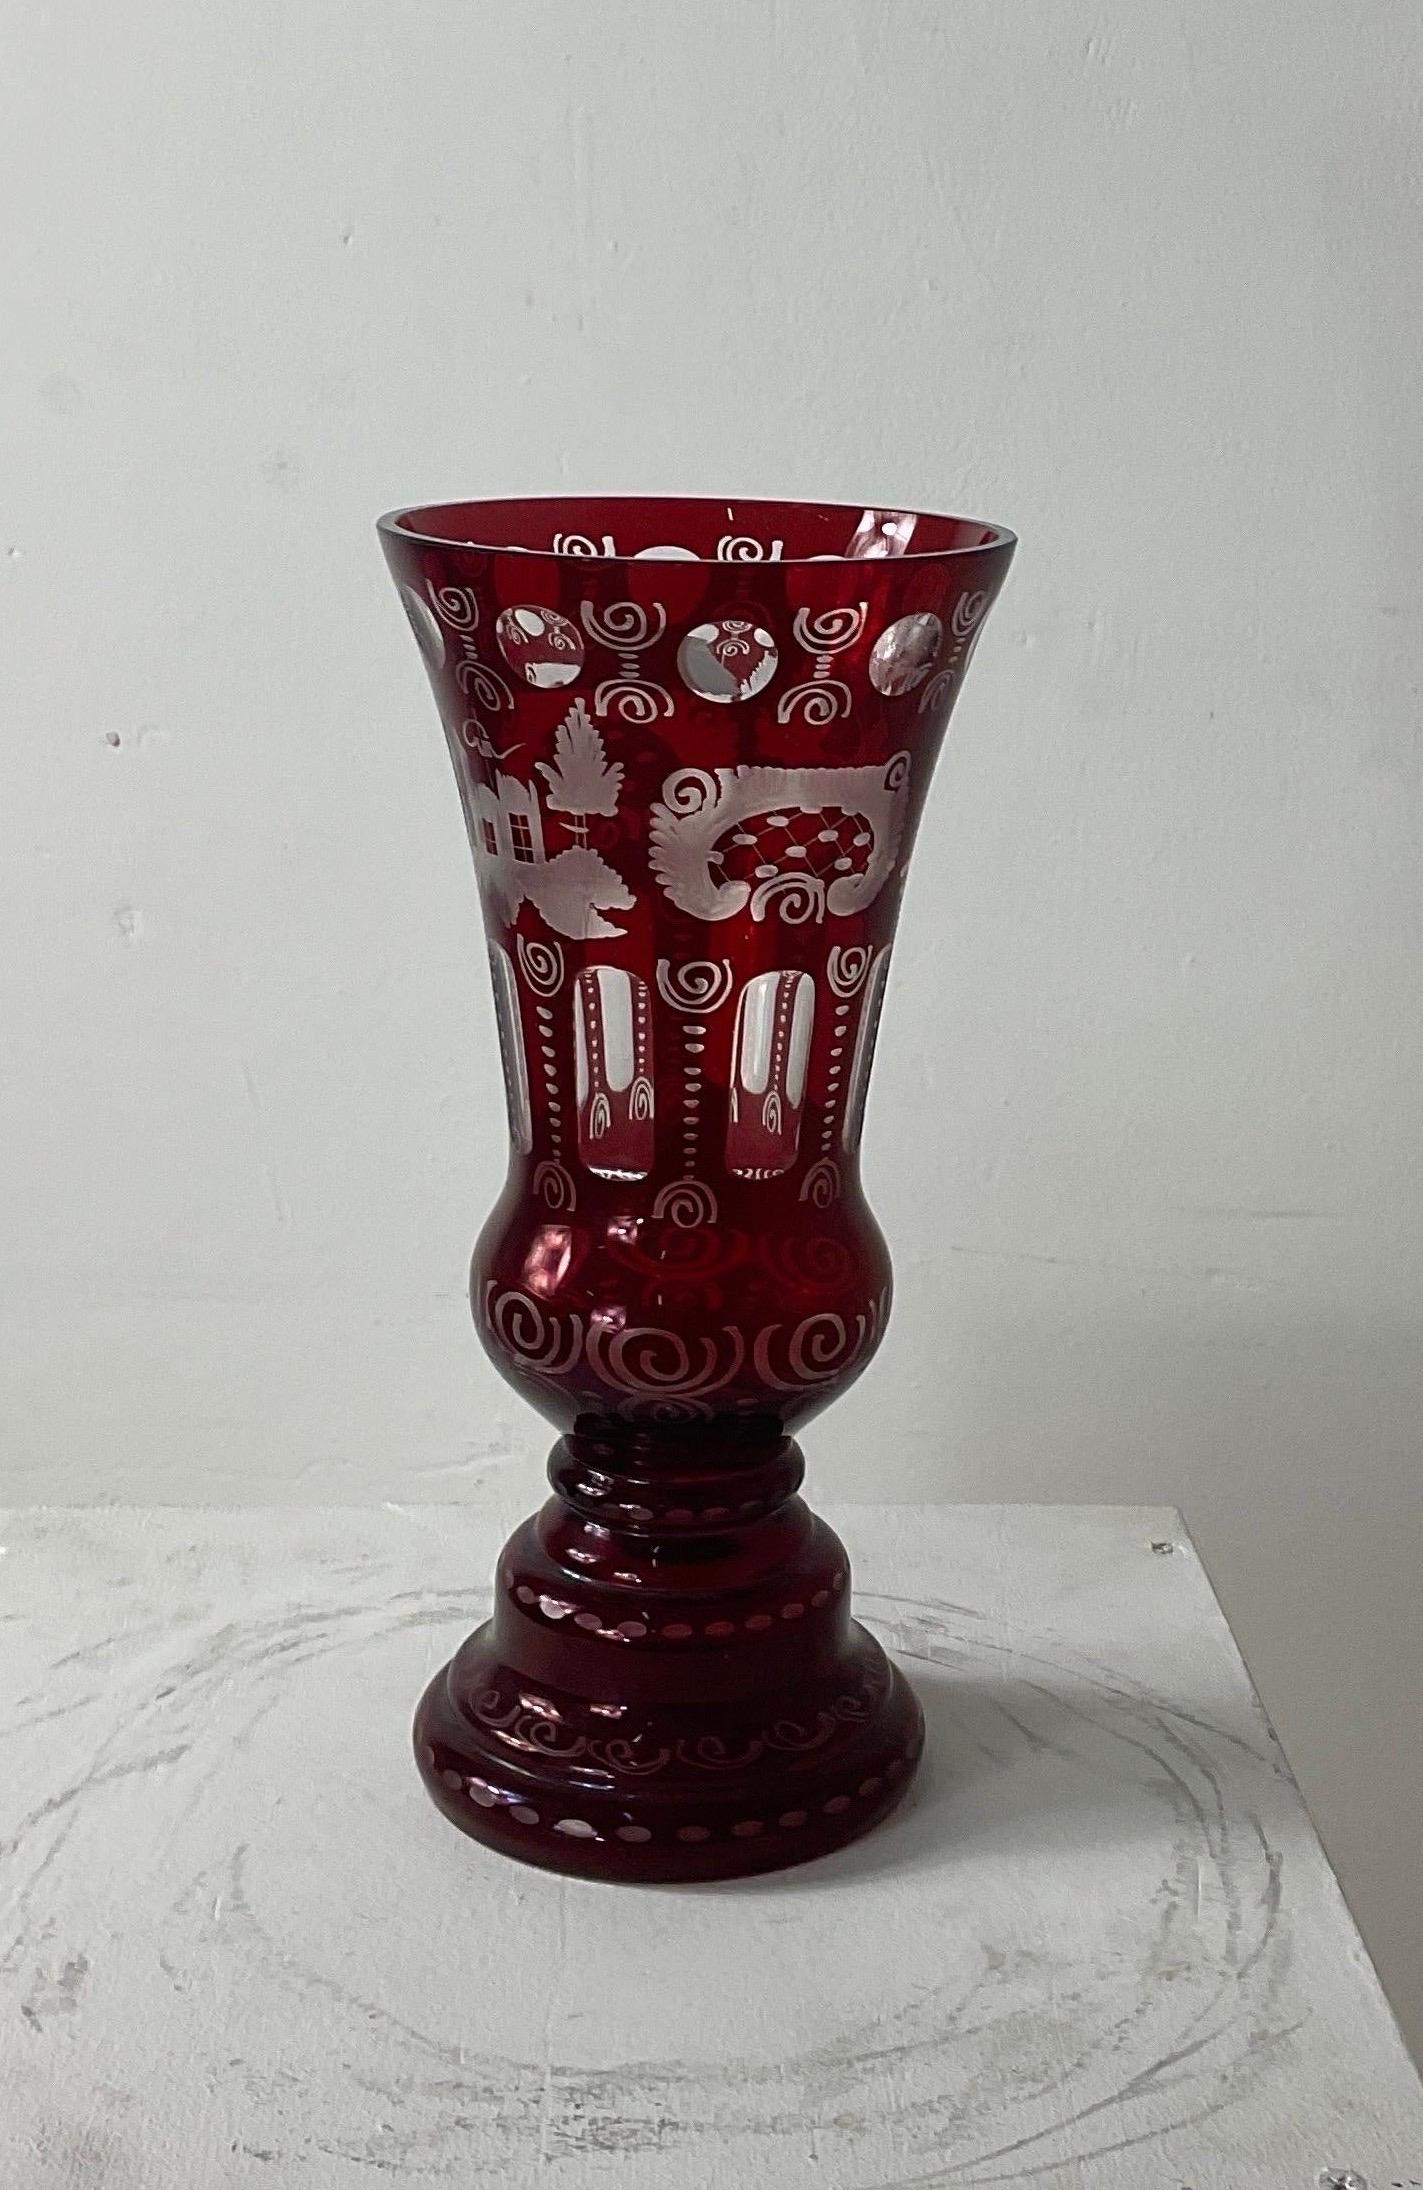 Oberstdorfer Glashütte - Egermann antique glass vase, bohemian glass, red ruby crystal, used glass collectable vase height 24 cm, diameter over 16 cm.